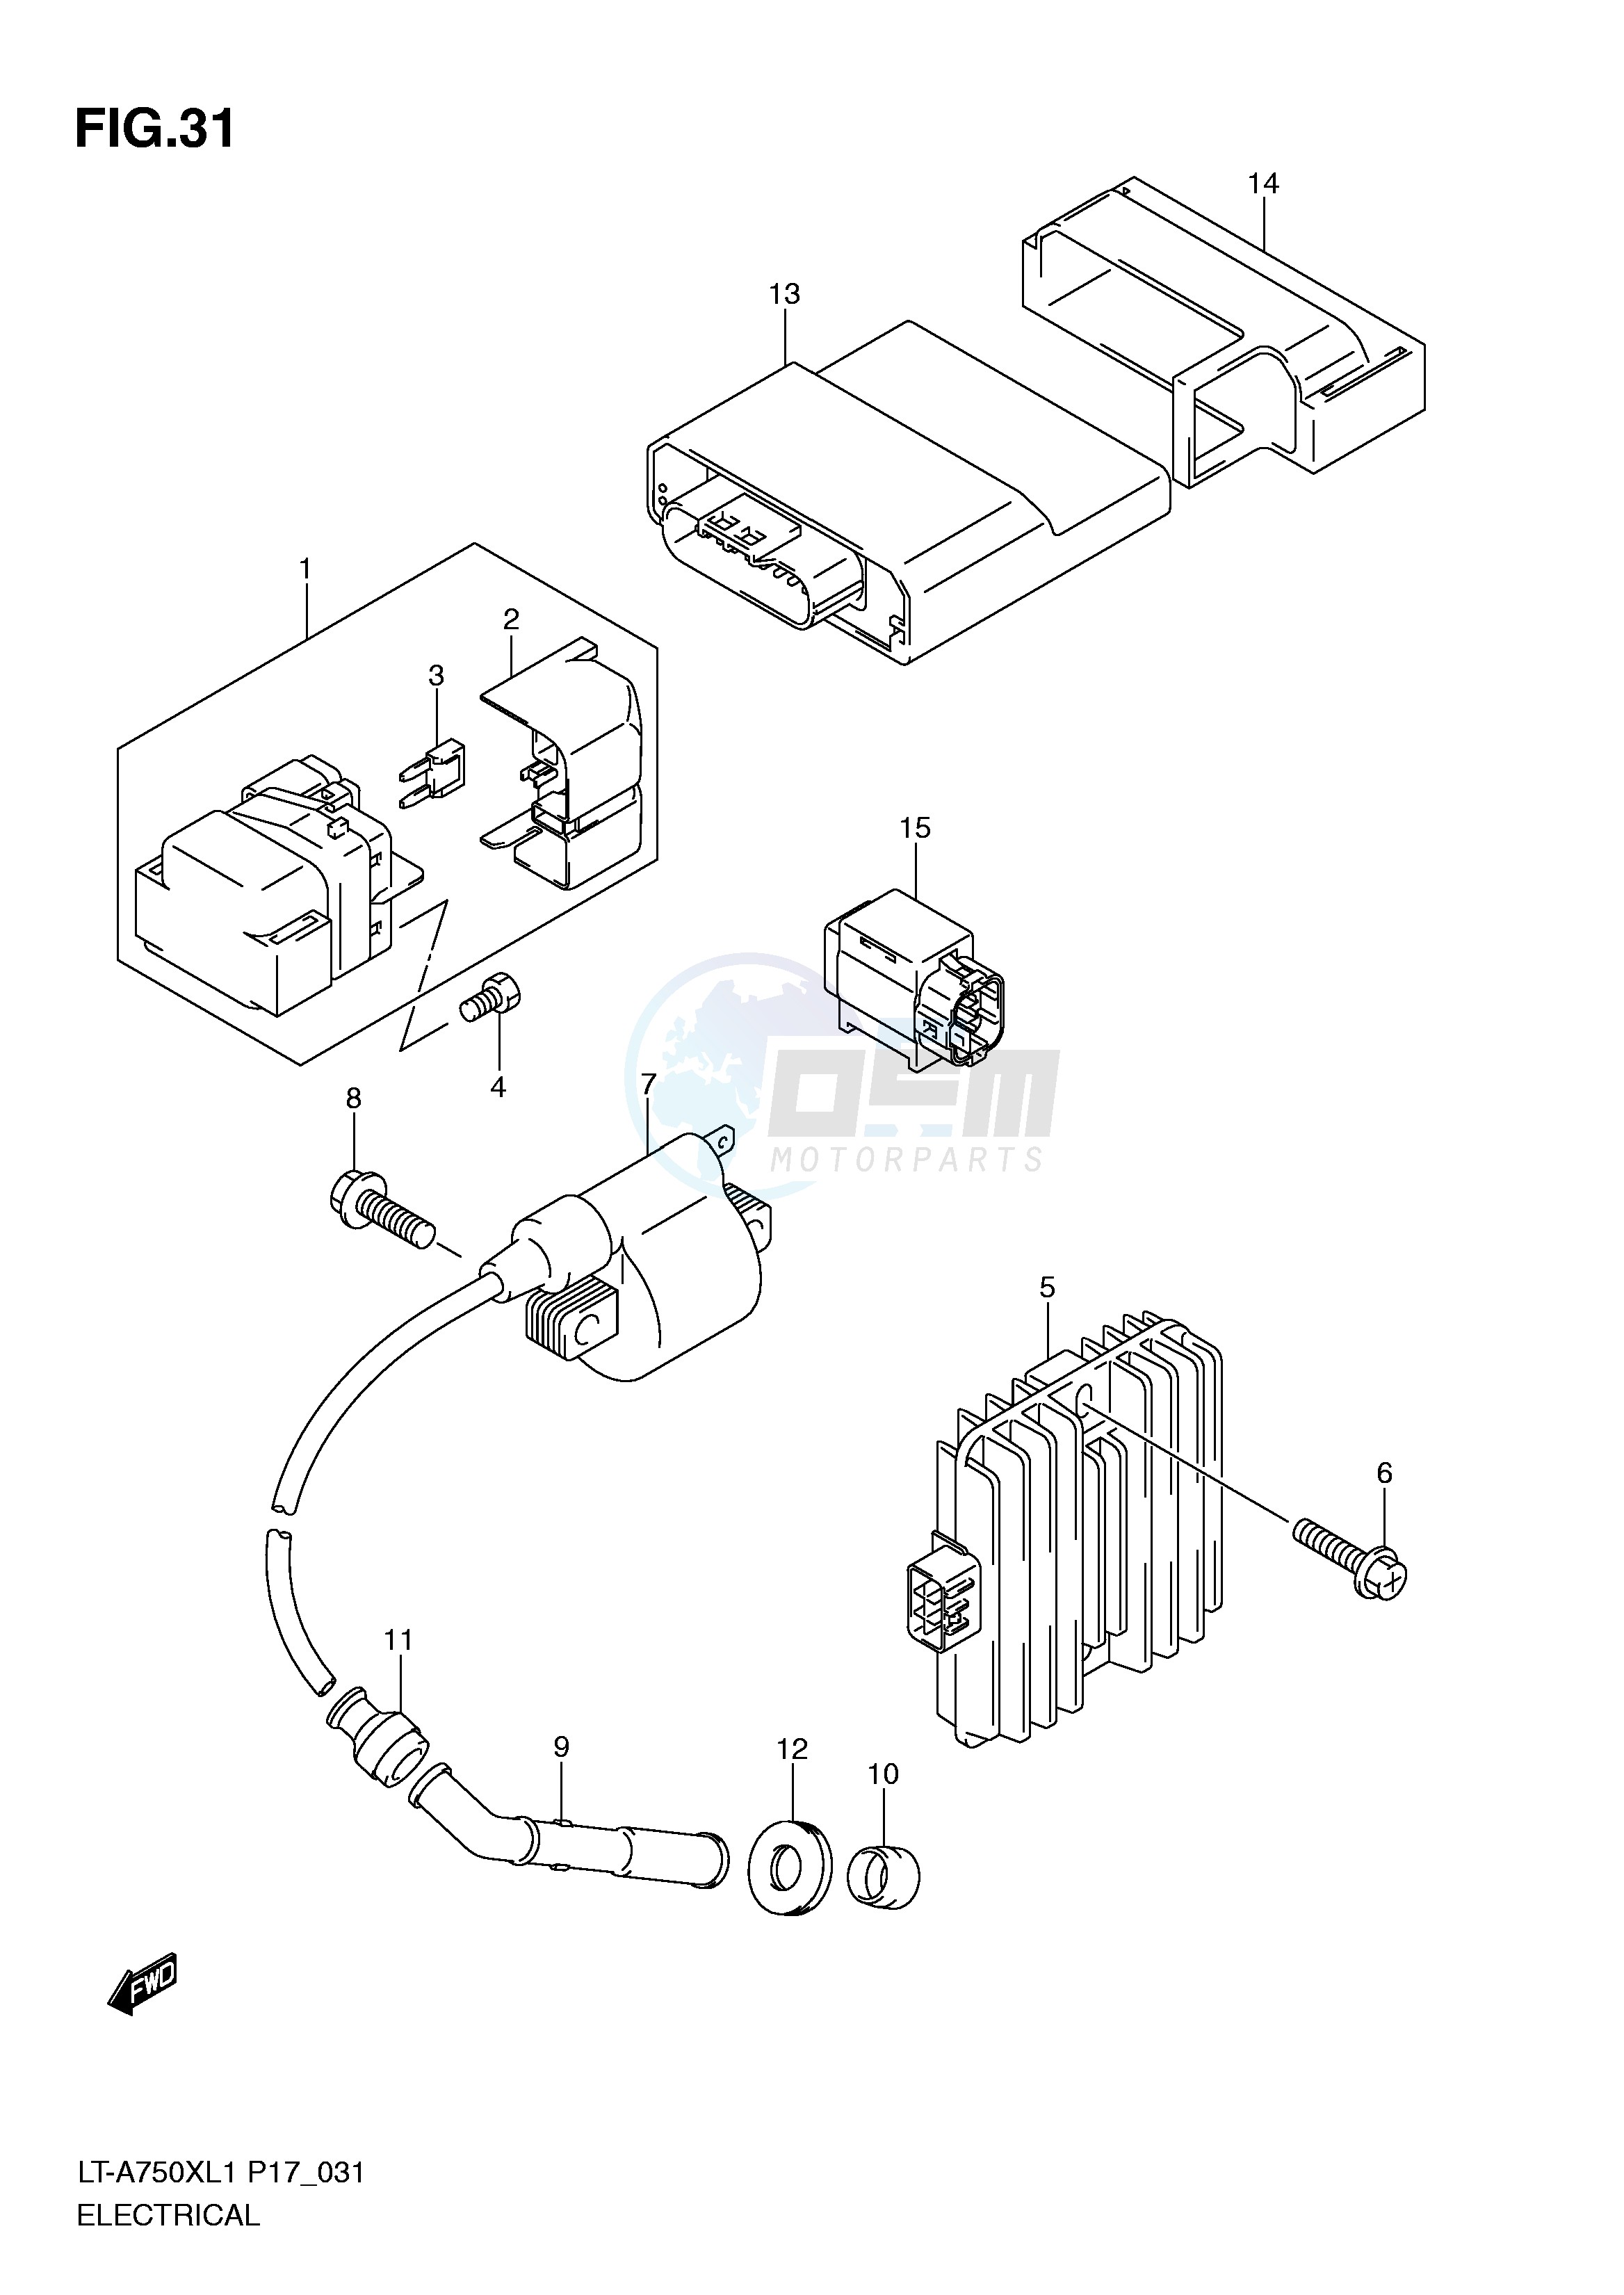 ELECTRICAL (LT-A750XL1 P17) blueprint